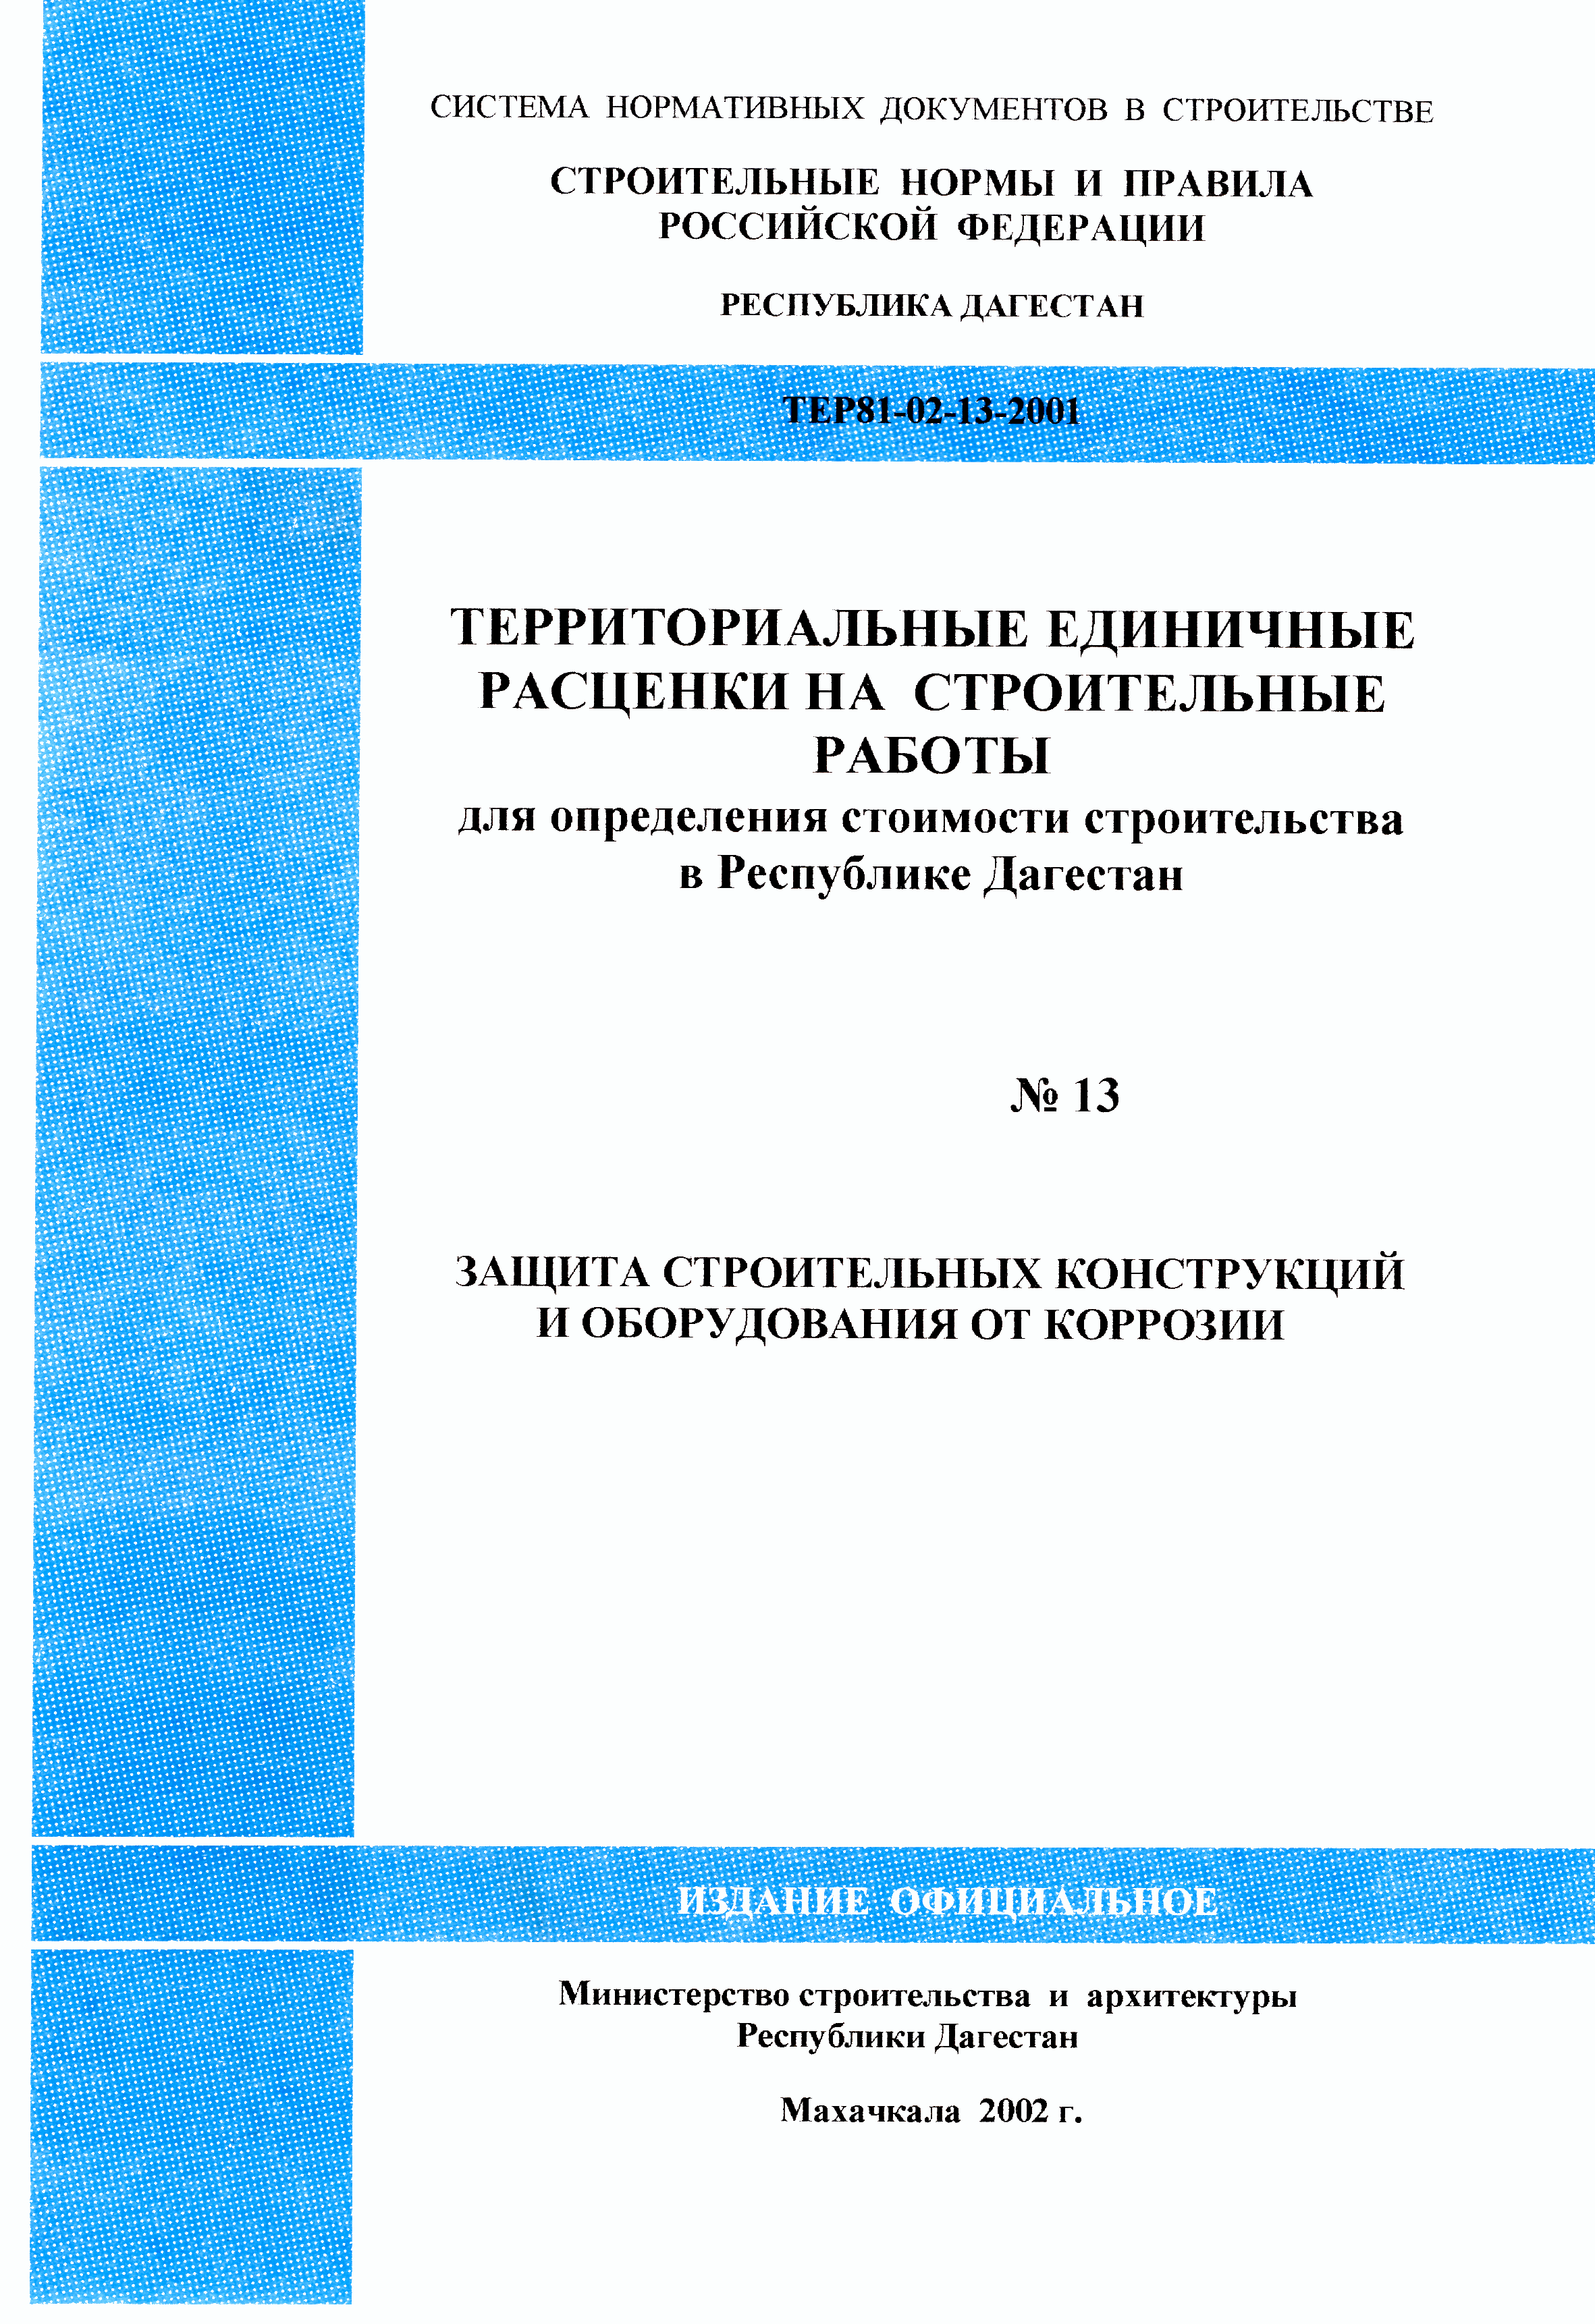 ТЕР Республика Дагестан 2001-13